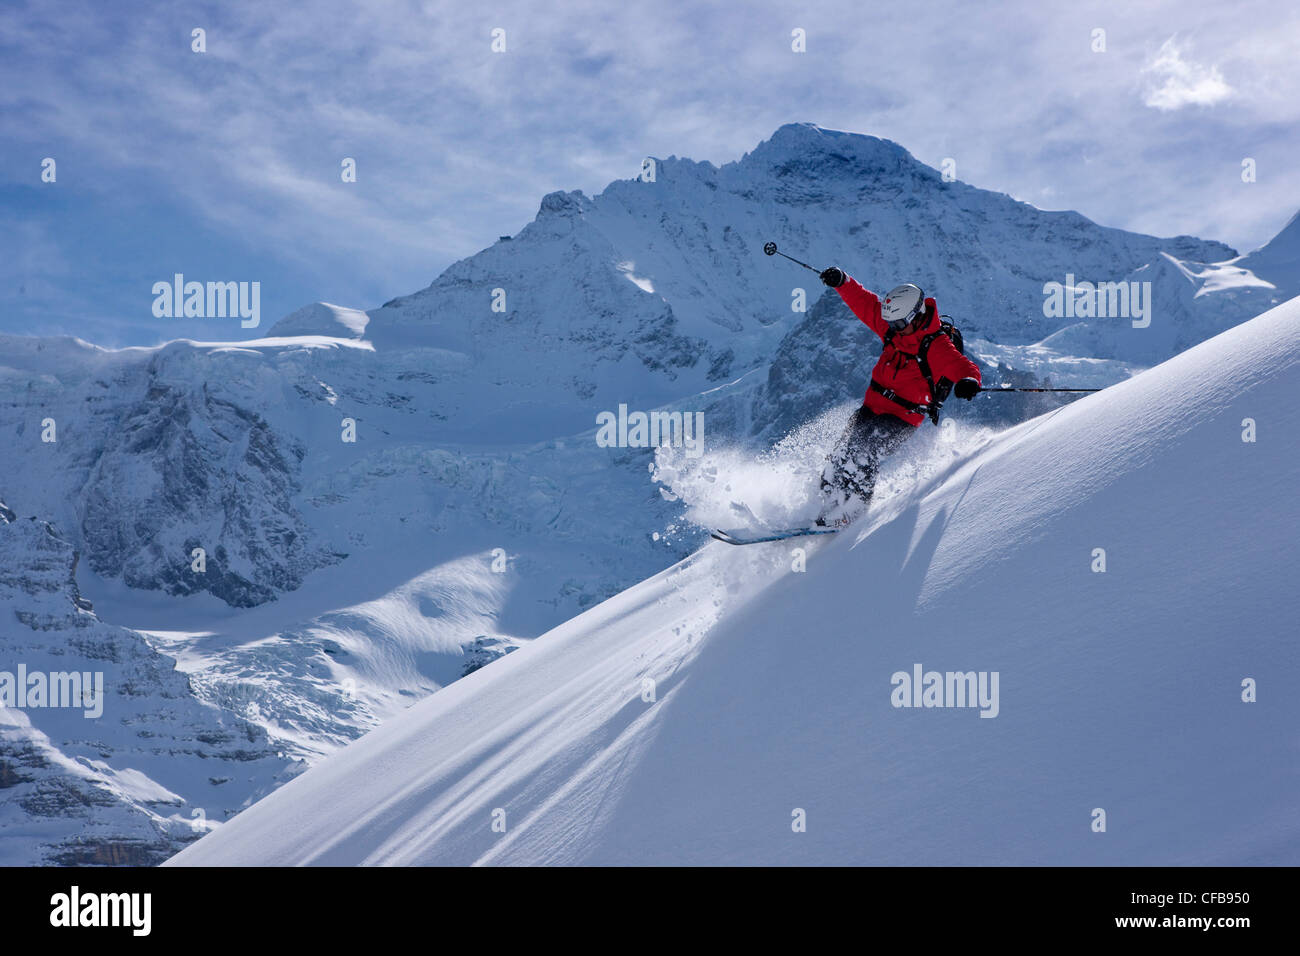 Montagna, montagne, neve, turismo, vacanze inverno, la neve, canton Berna Oberland Bernese, Svizzera, Europa, Jungfrau, Alpi Foto Stock